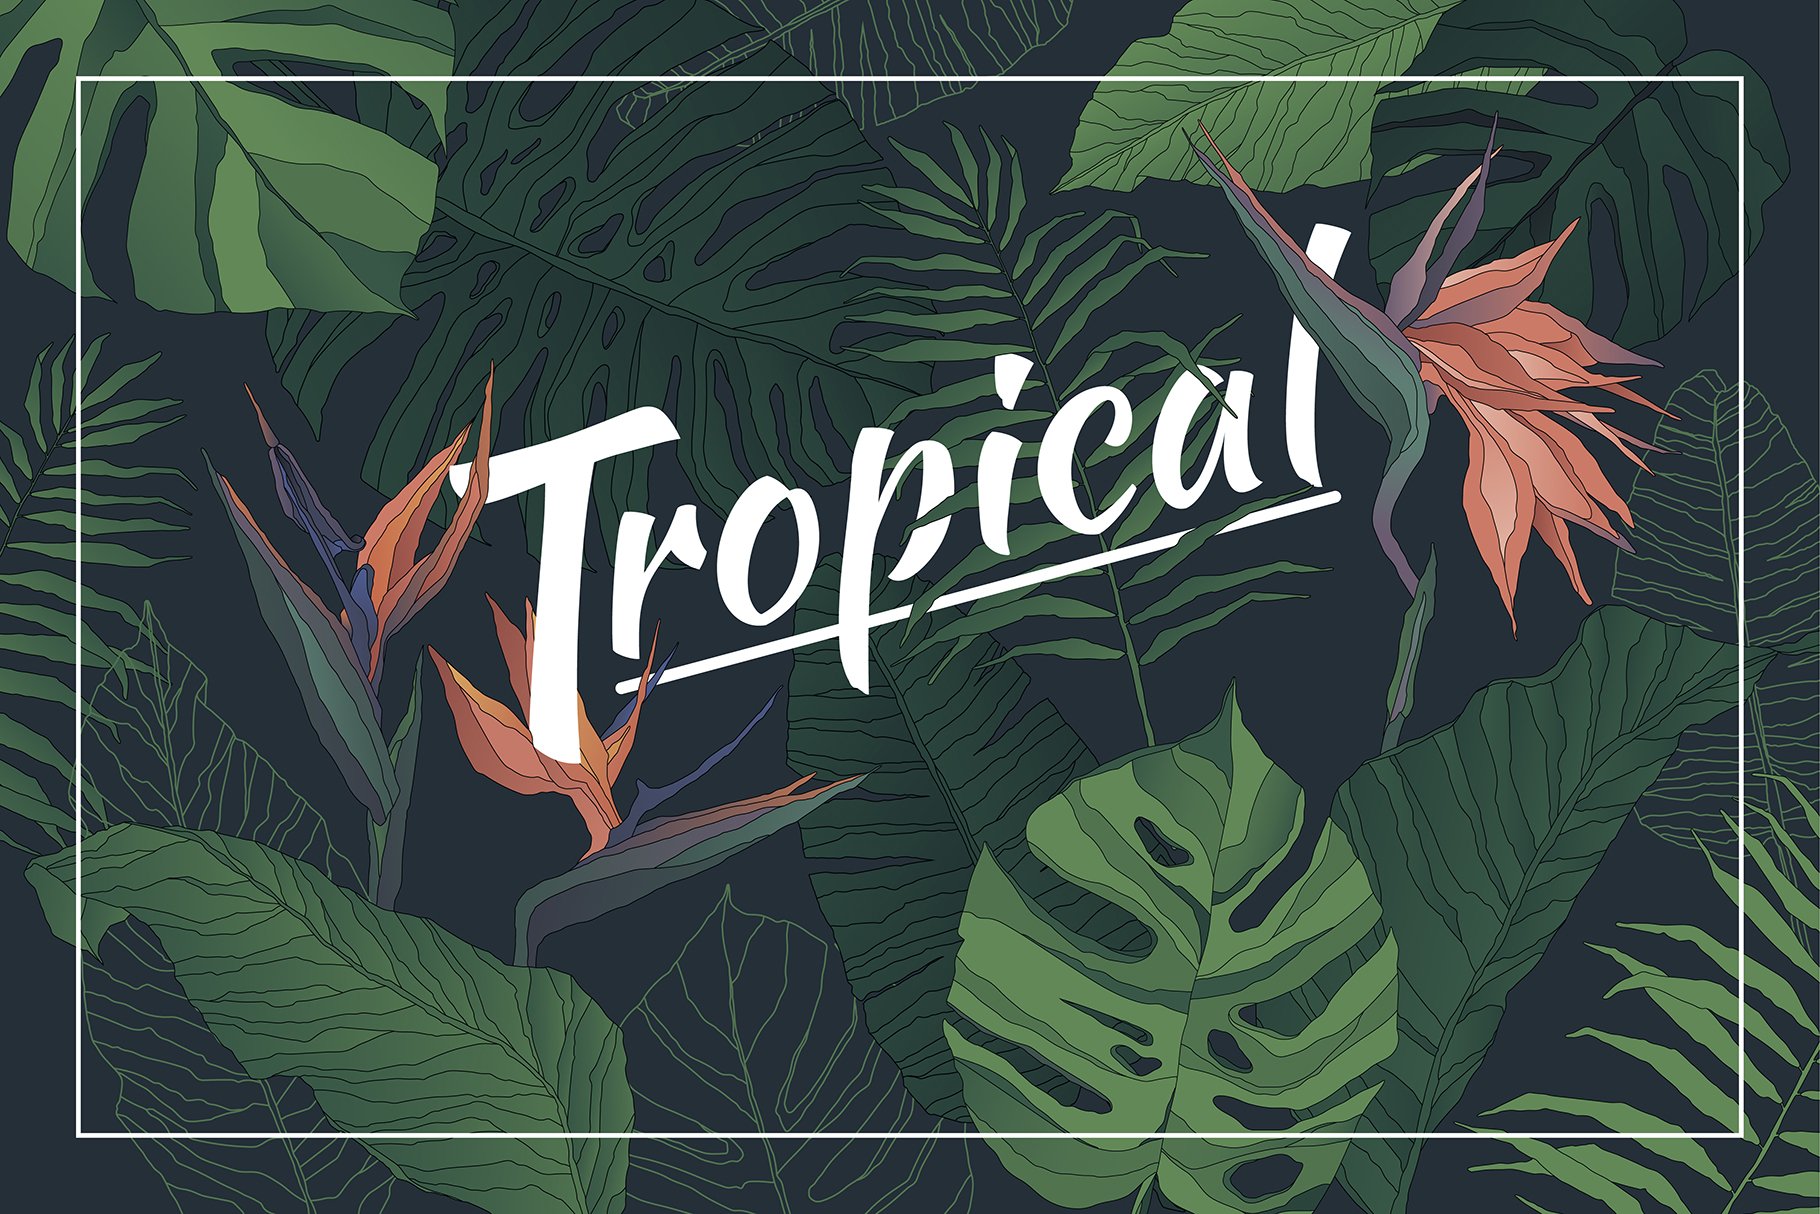 Tropical Set cover image.